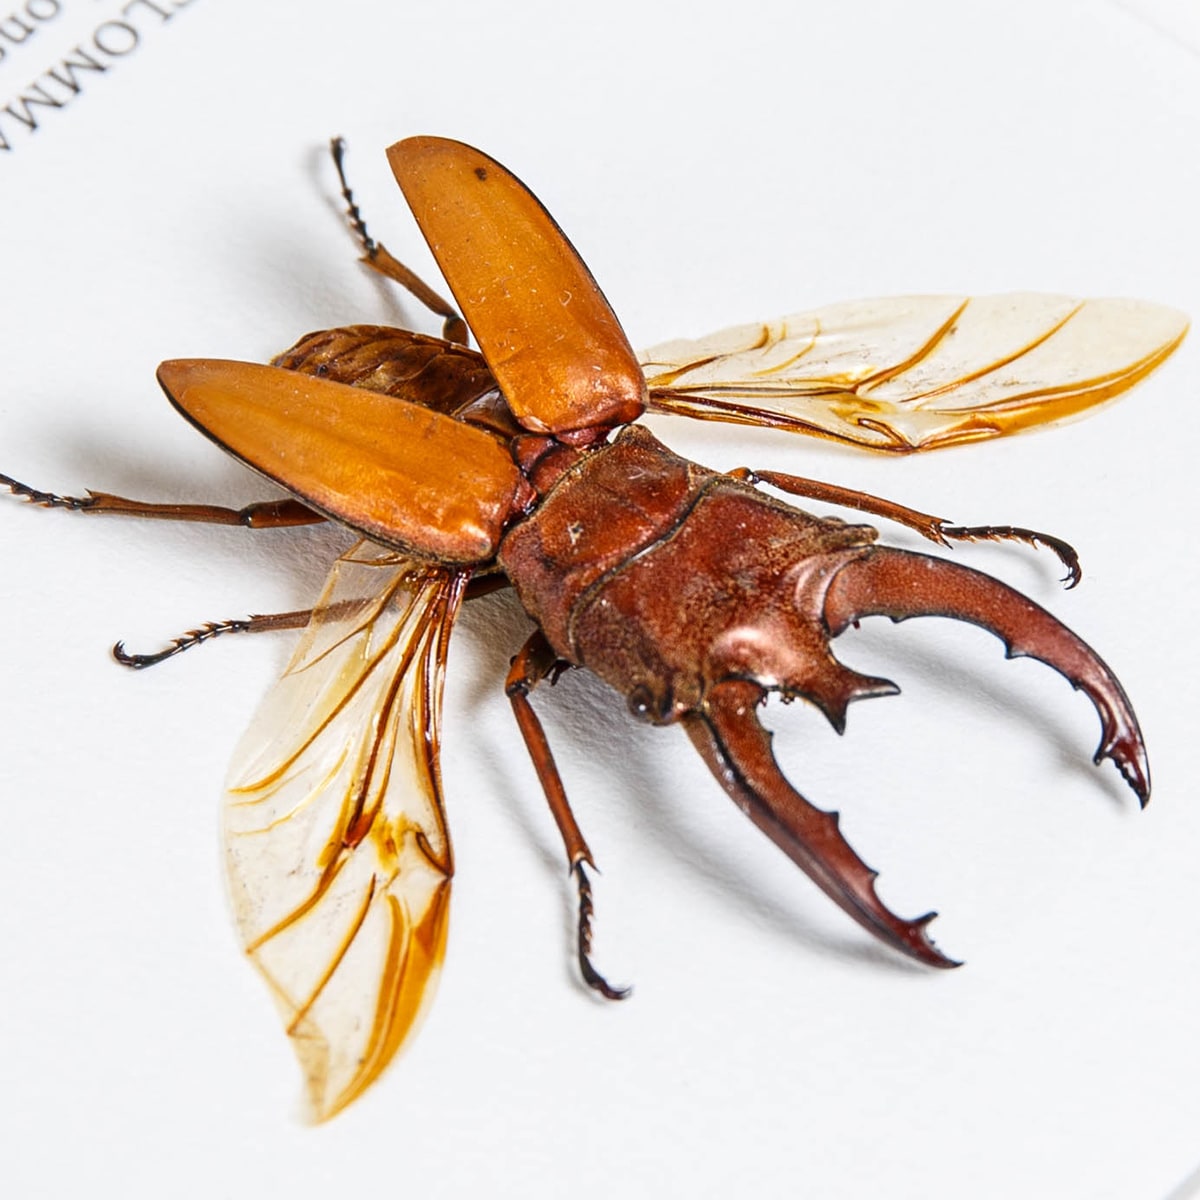 Long-horn Beetle In Box Frame (Cyclommatus lunifer)